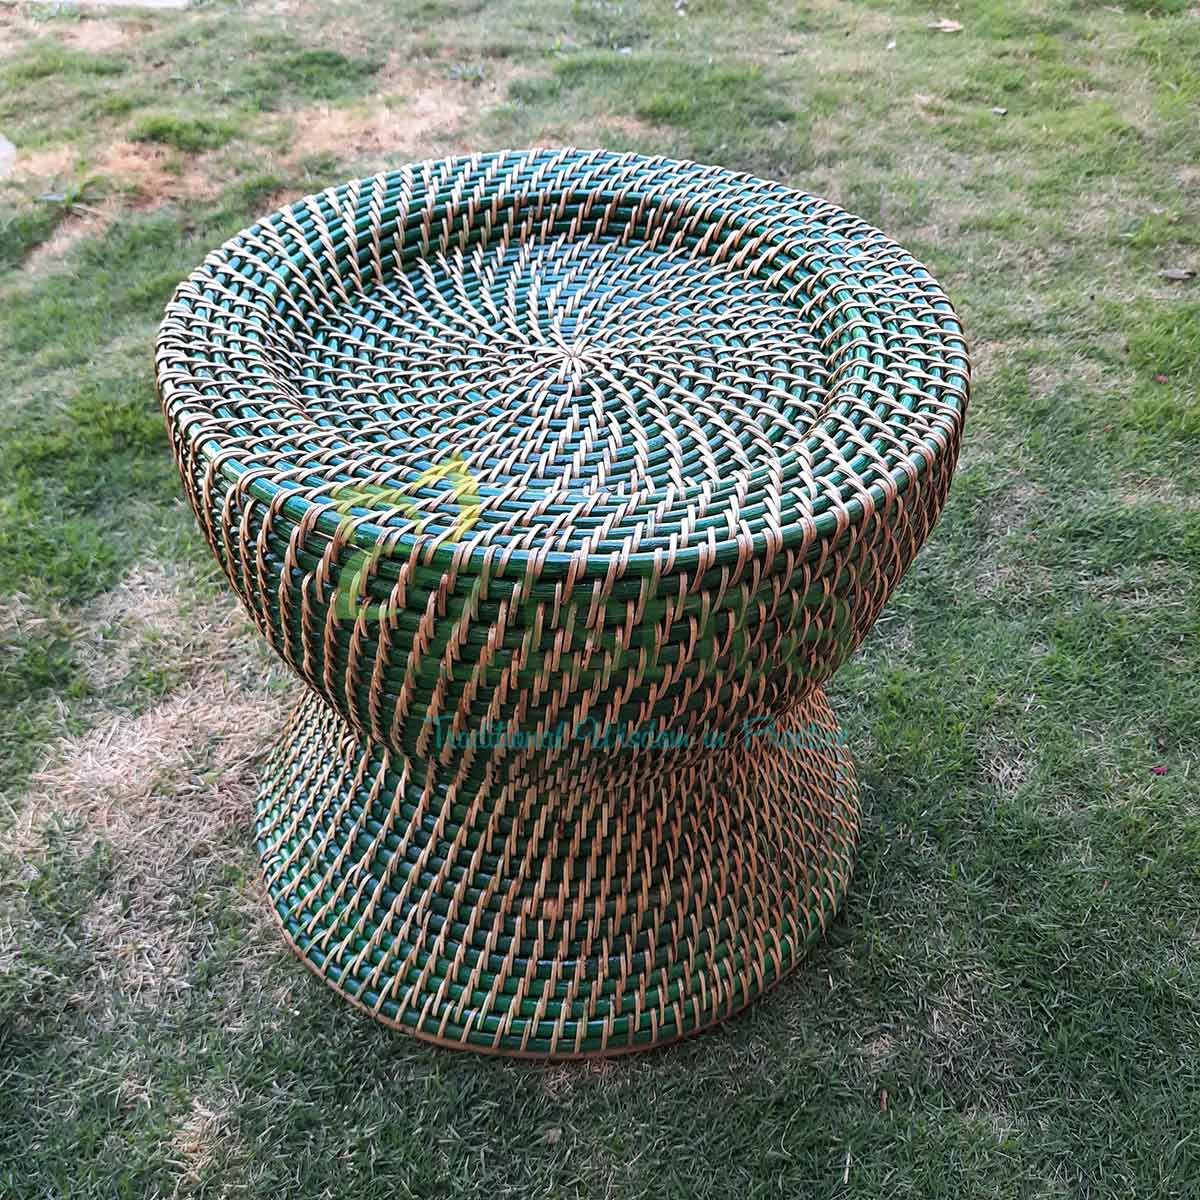 Curved Shape-Assam Cane Furniture - Seating Stool (Mudda-Morah)